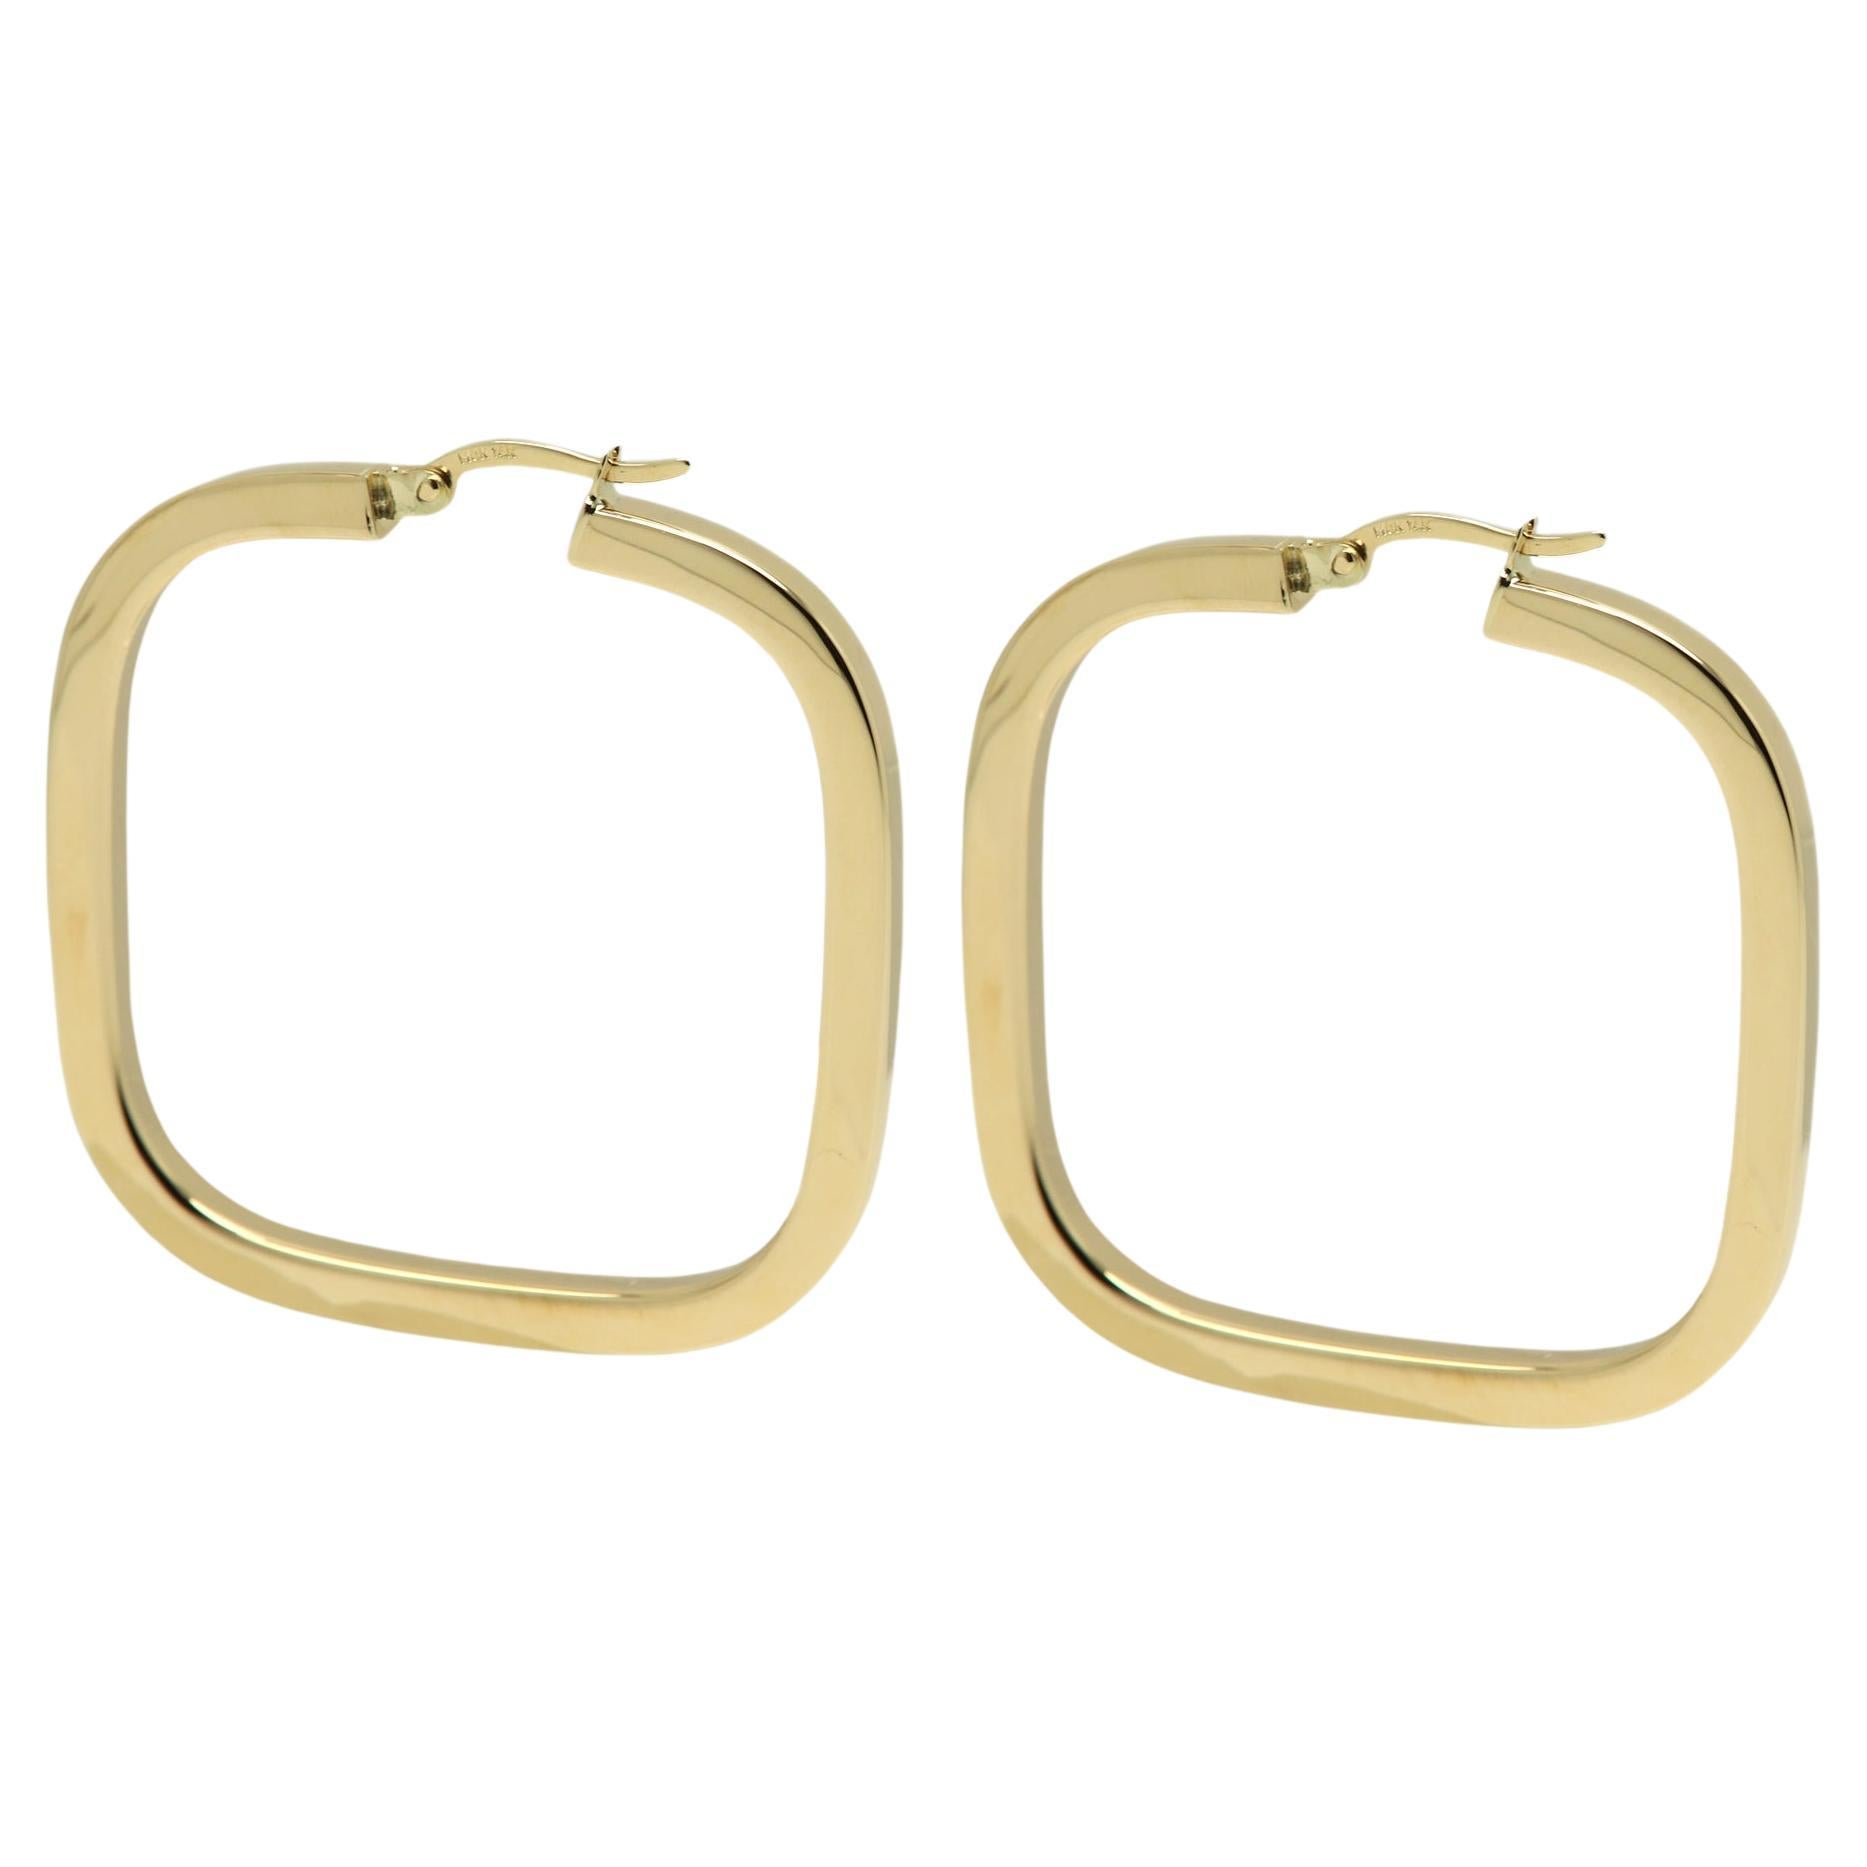 Square Italian Hoops 14 Karat Solid Gold Earrings Gold Hoops Artistic Earrings For Sale